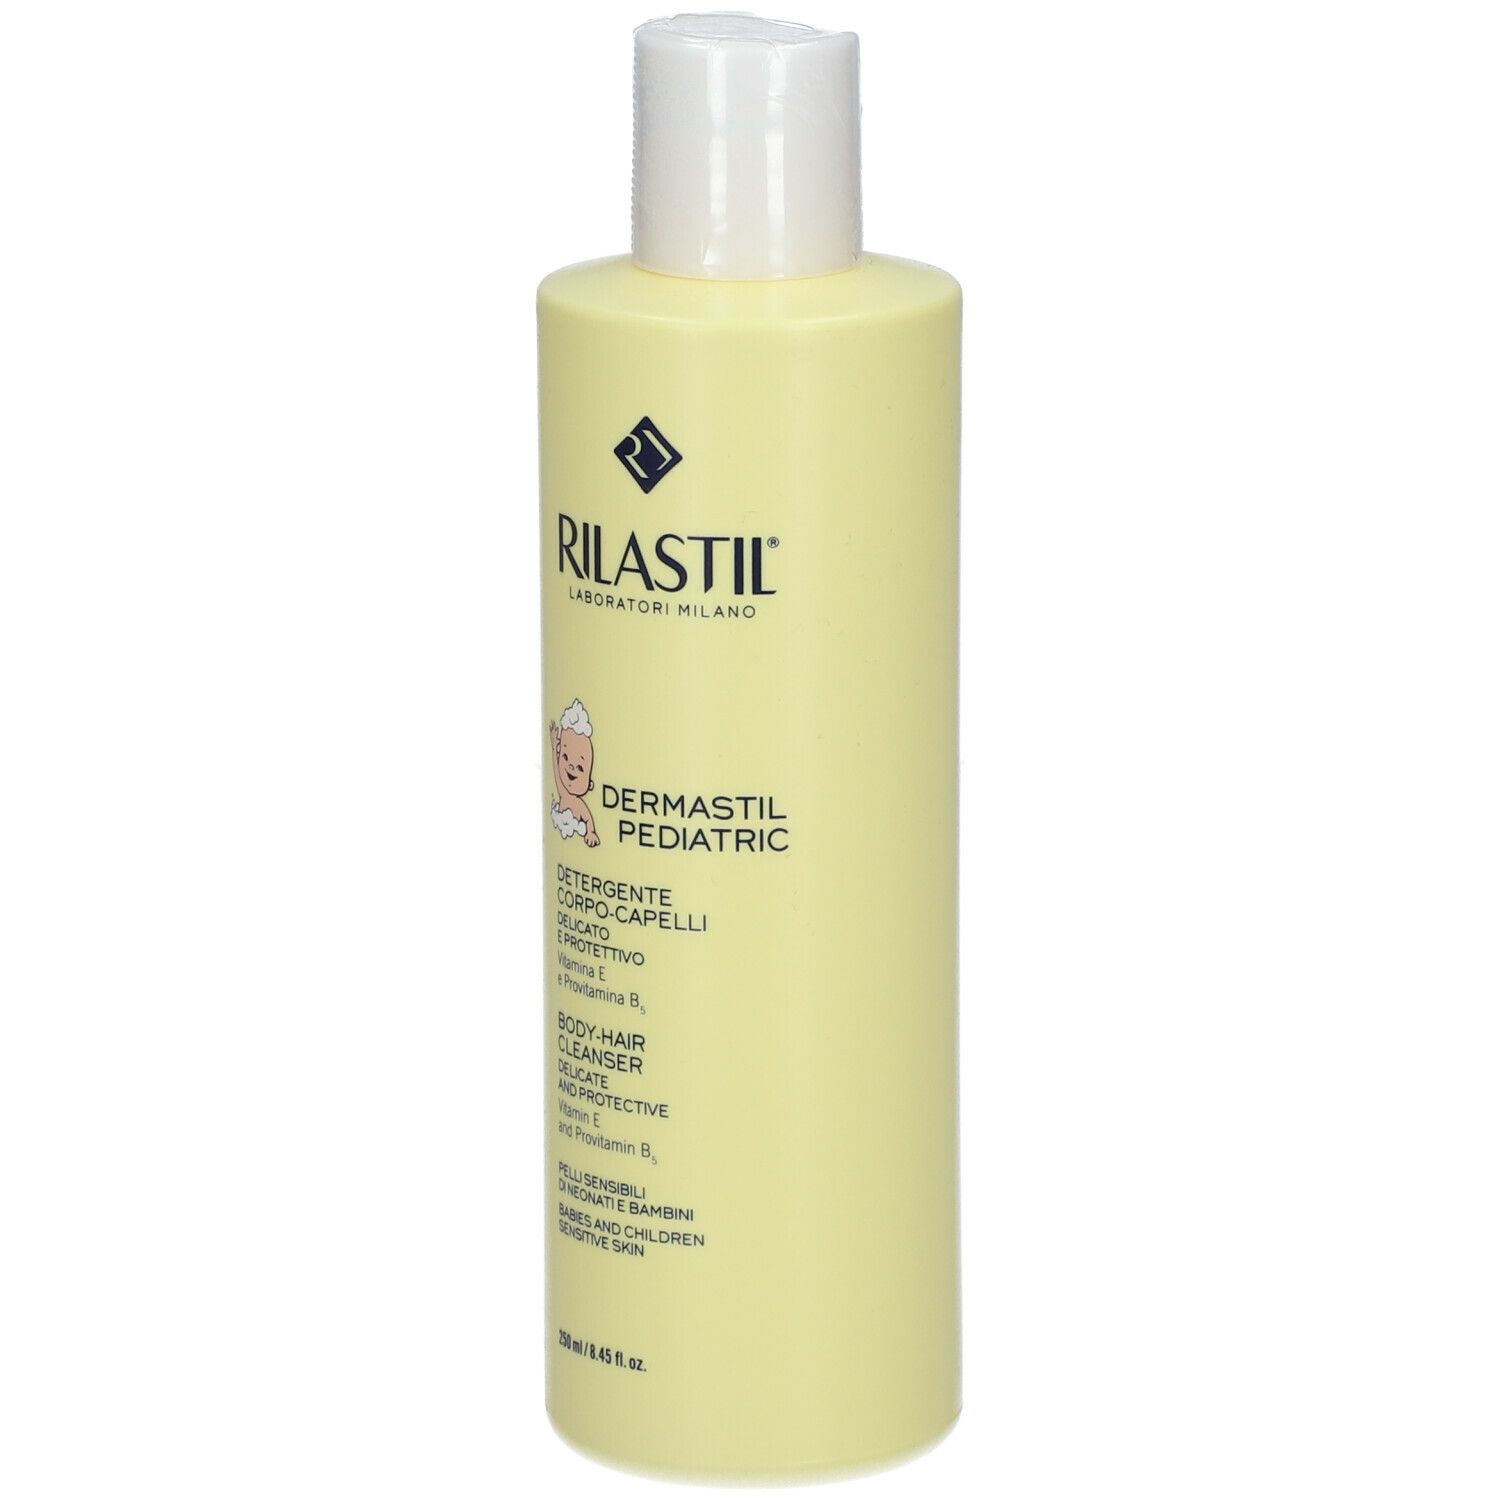 RILASTIL® Dermastil Pediatric Detergente Corpo-capelli